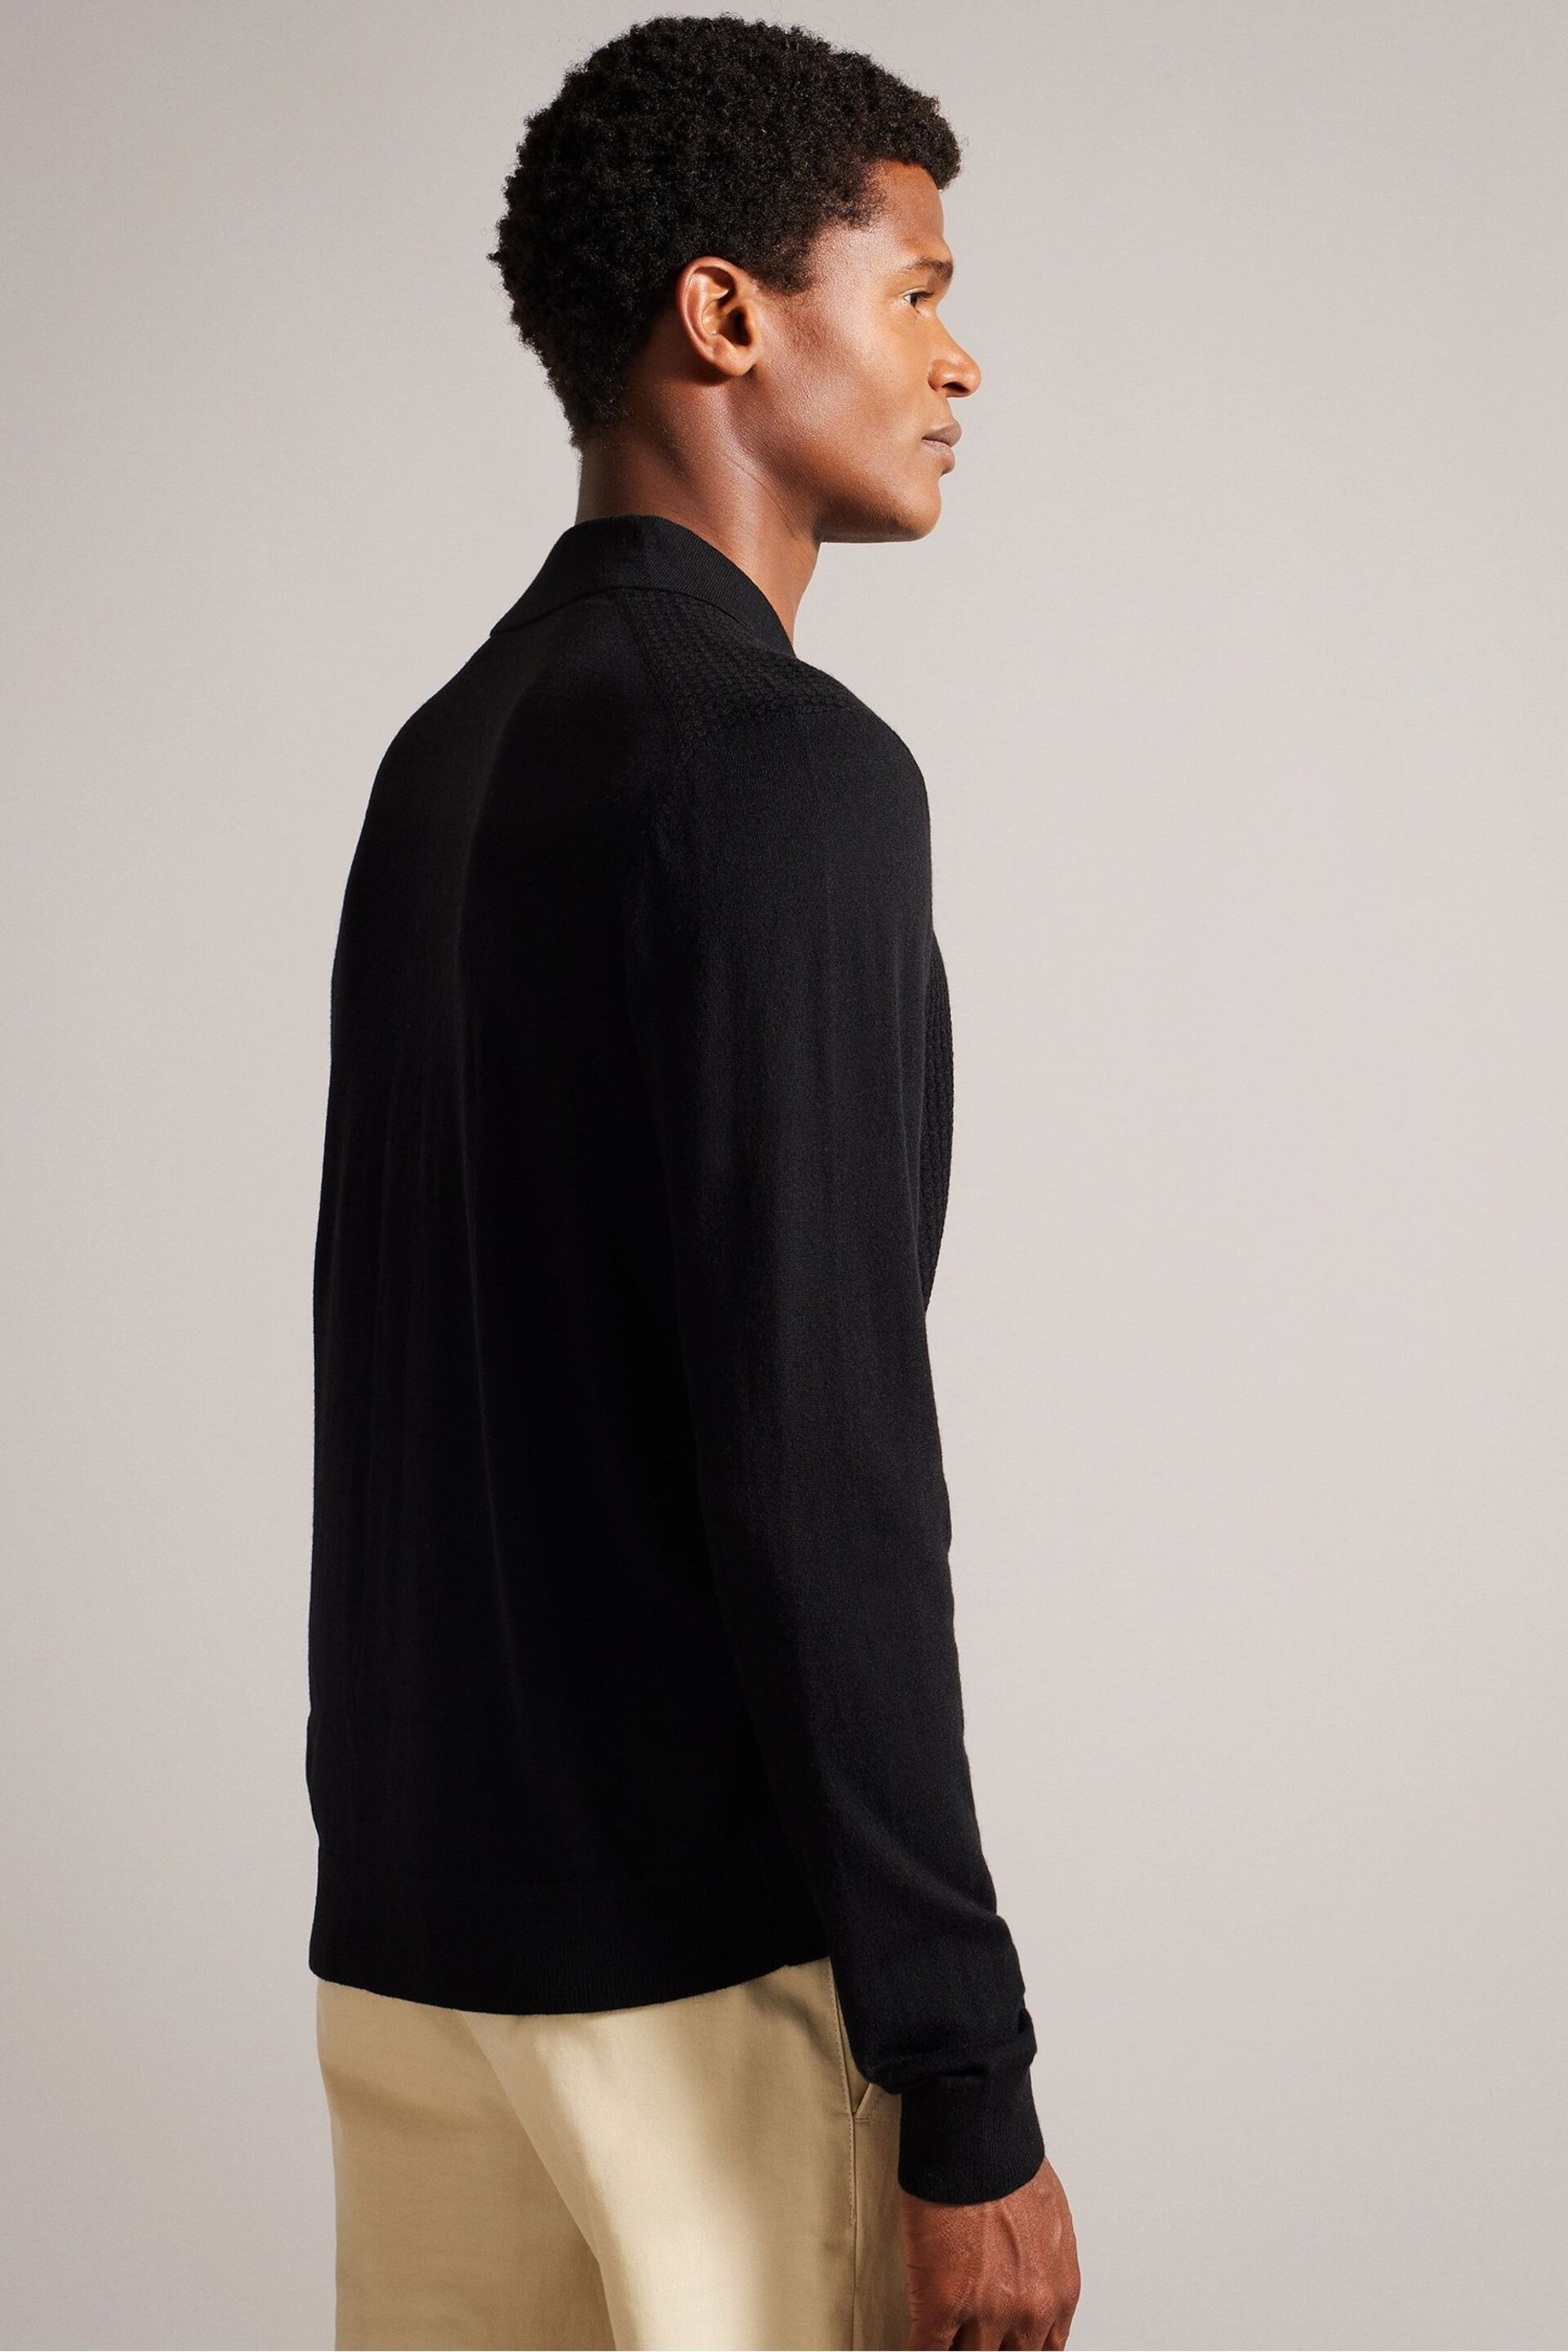 Ted Baker Black Oidar Long Sleeve Revere Collar Knitted Polo Shirt - Image 2 of 6